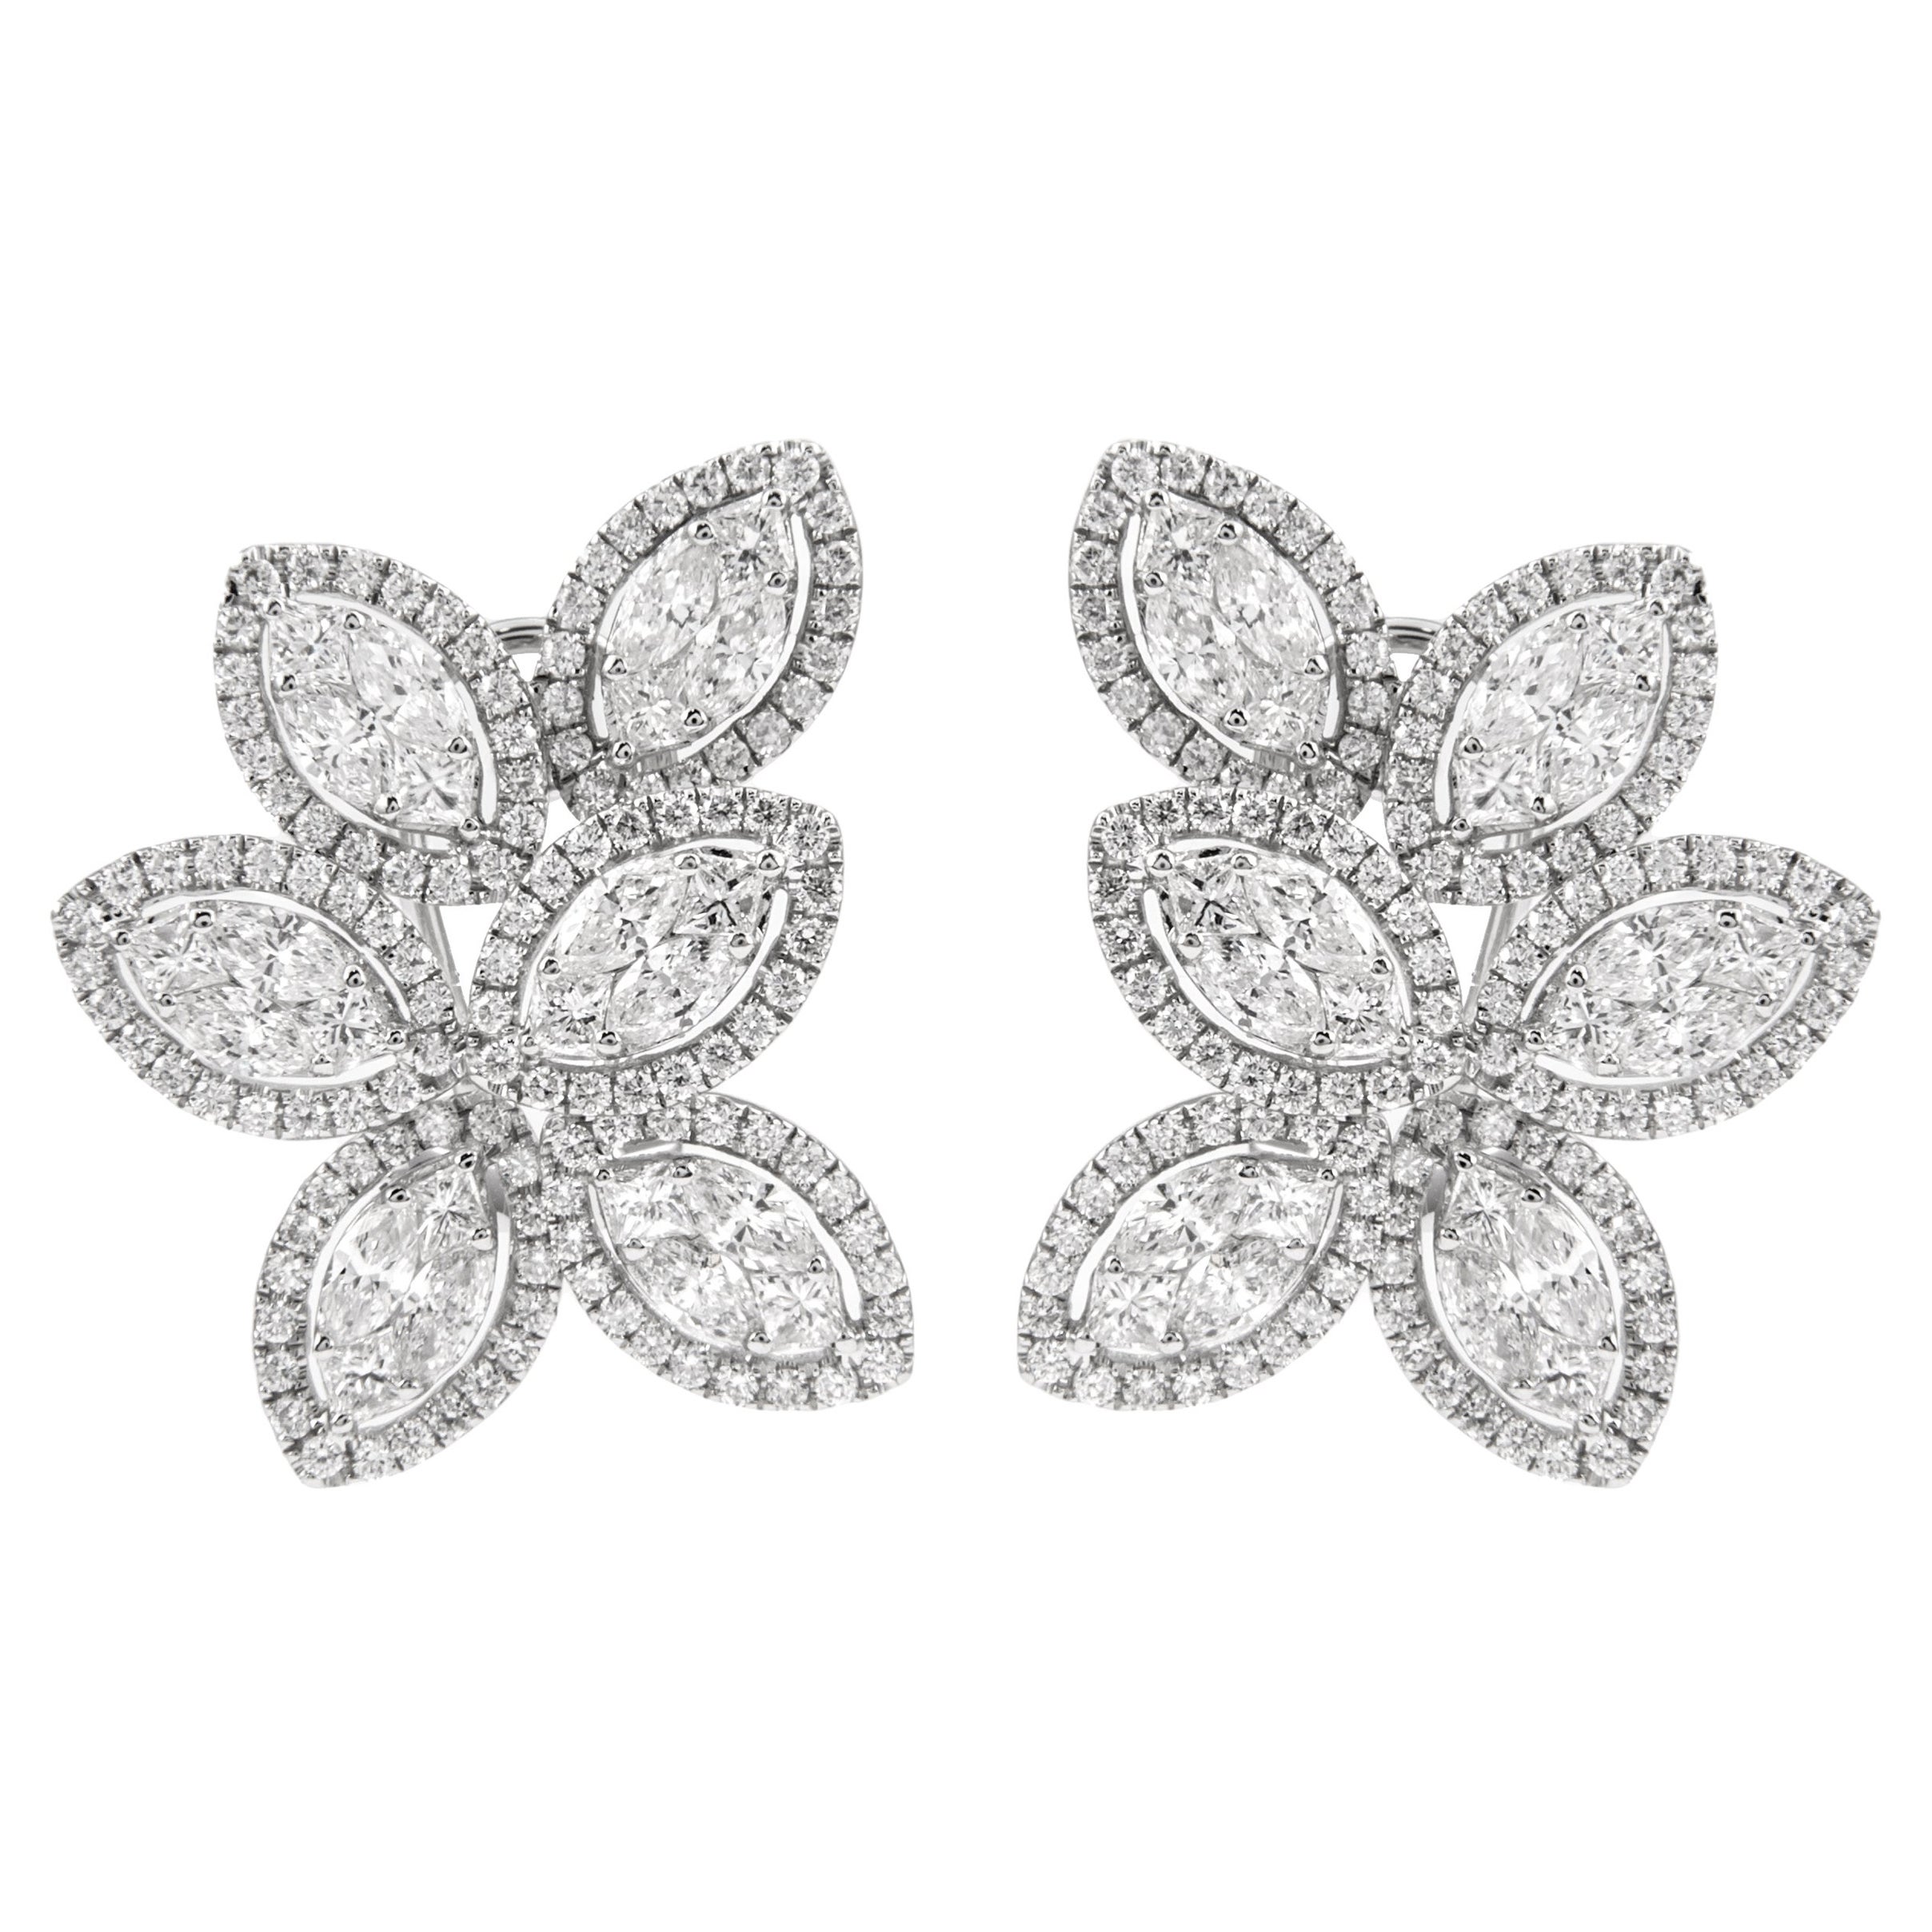 Alexander 5.53ct Illusion Set Cluster Diamond Earrings 18k White Gold For Sale